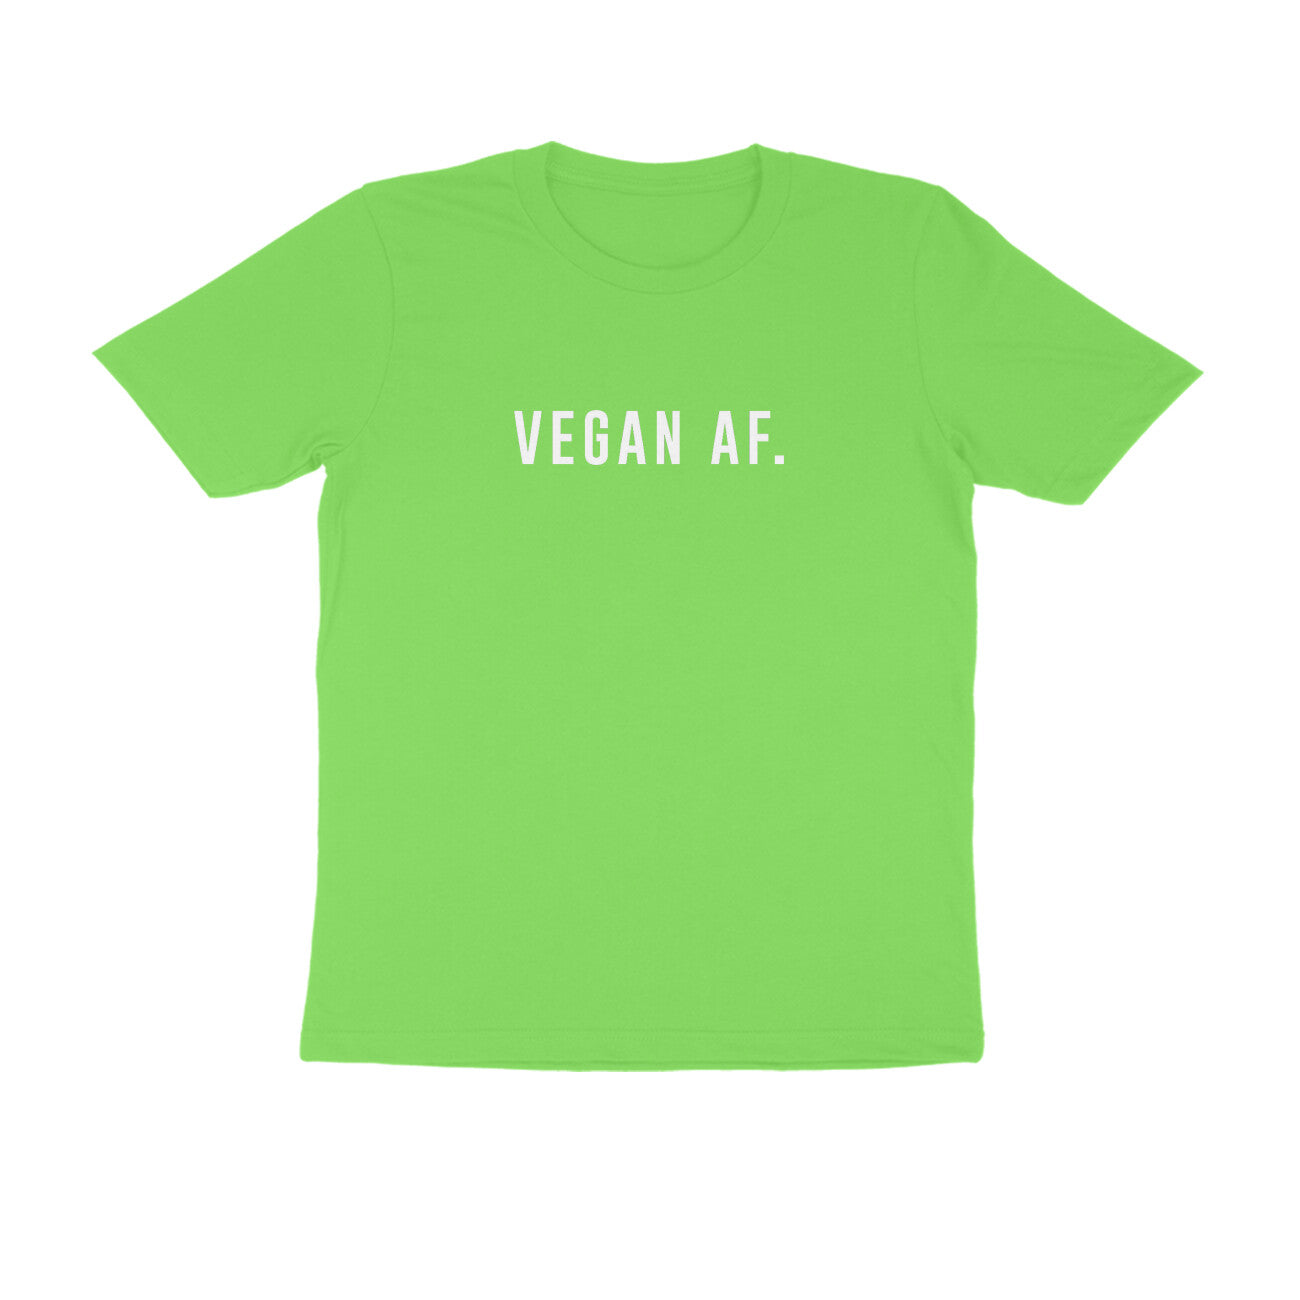 Vegan AF. Vegan T-shirt